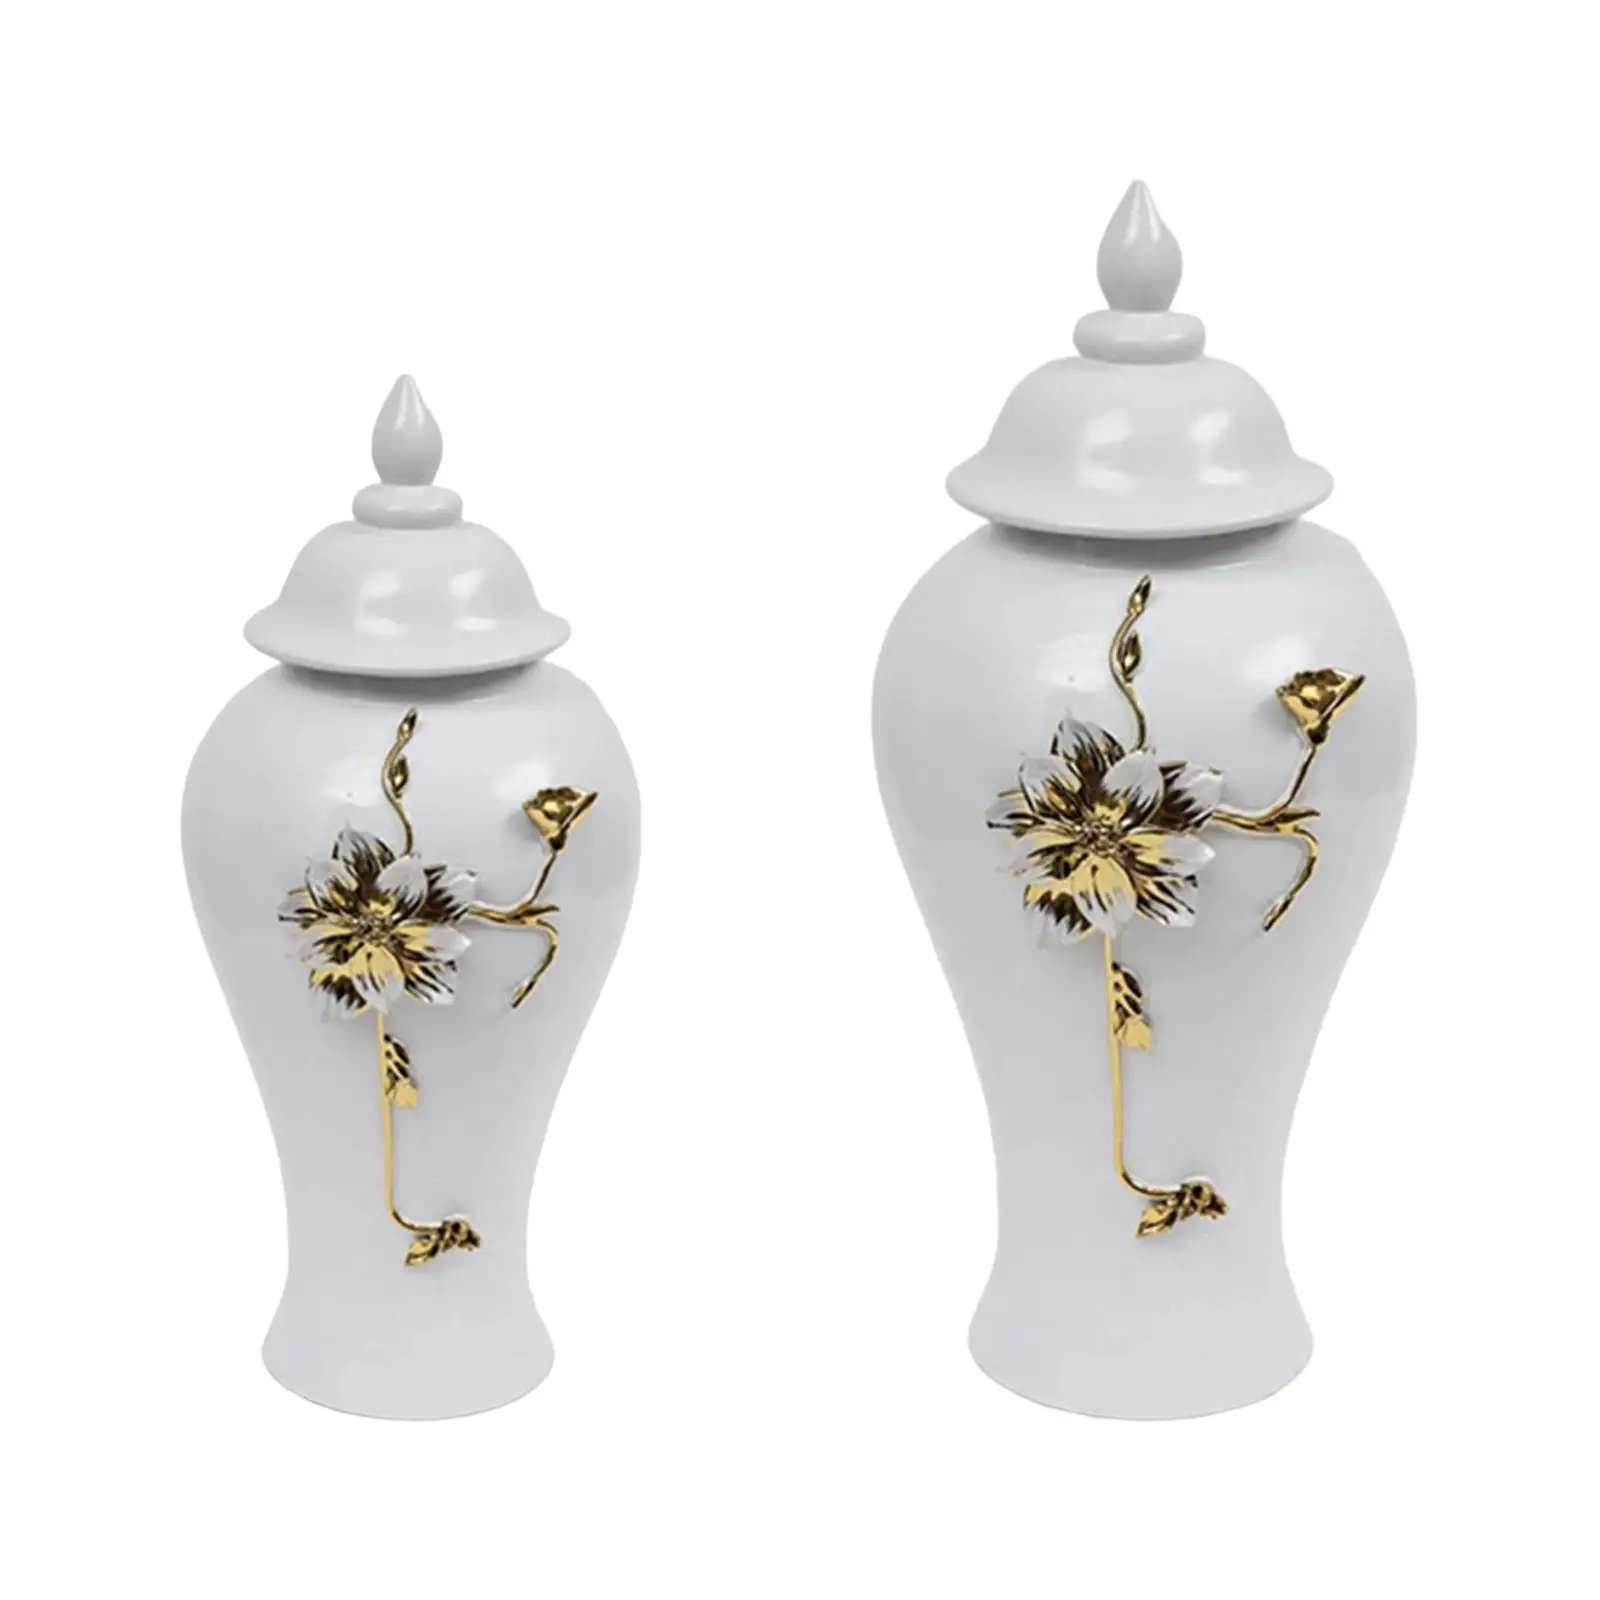 Porcelain Vase Temple Jar with Lid Oriental Style Ginger Jar Room Decor Multi Purpose Fine Glaze Finish Delicate